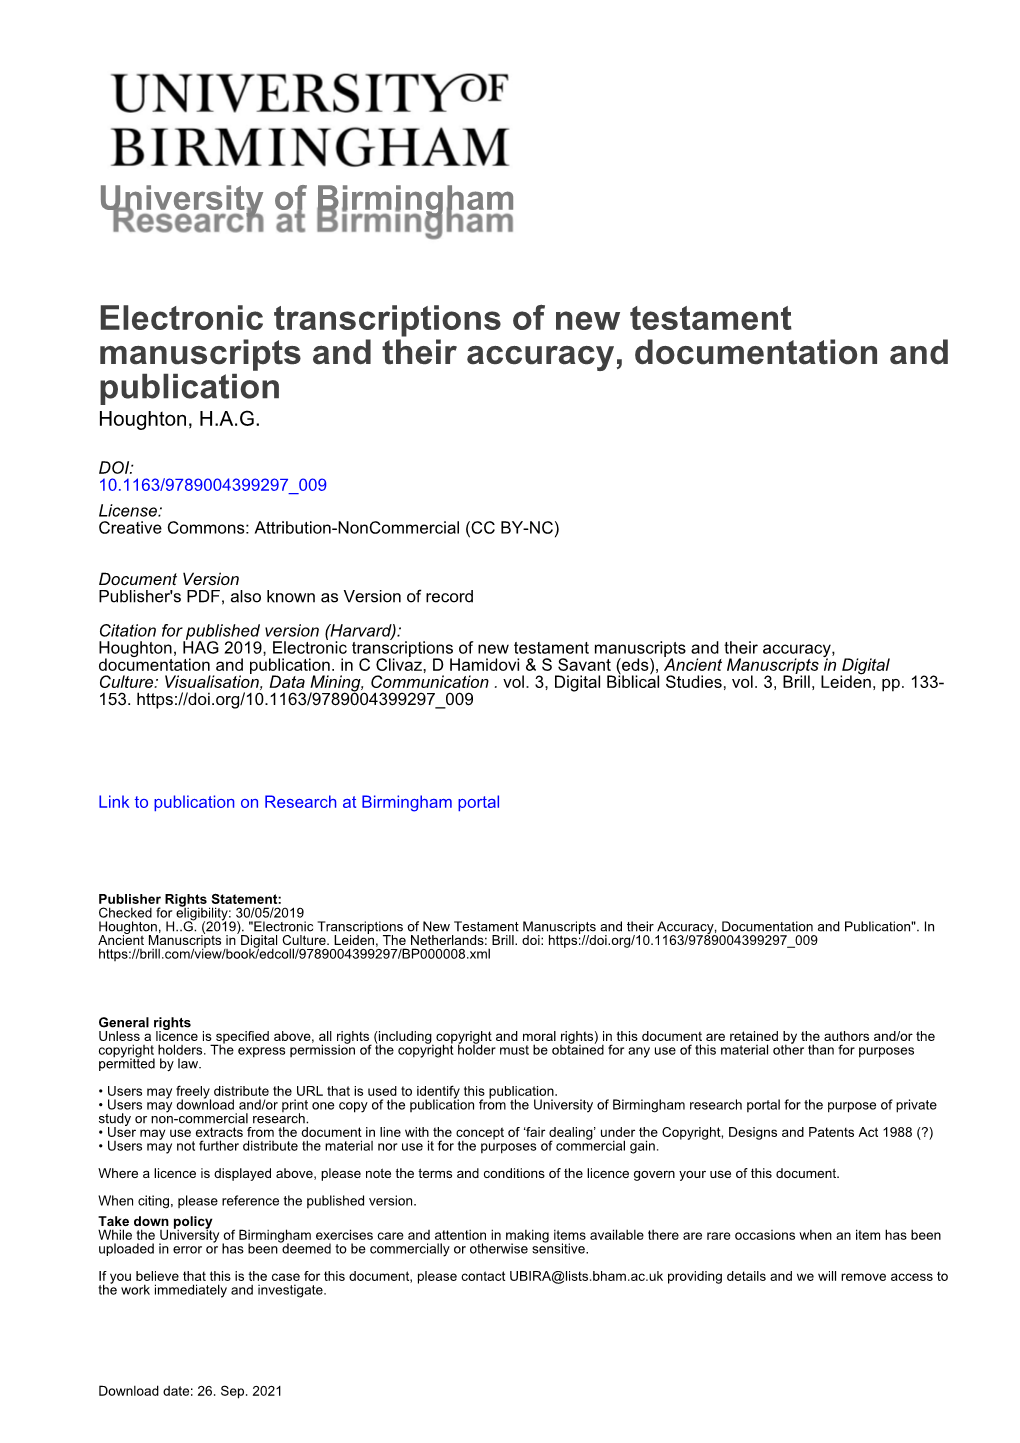 University of Birmingham Electronic Transcriptions of New Testament